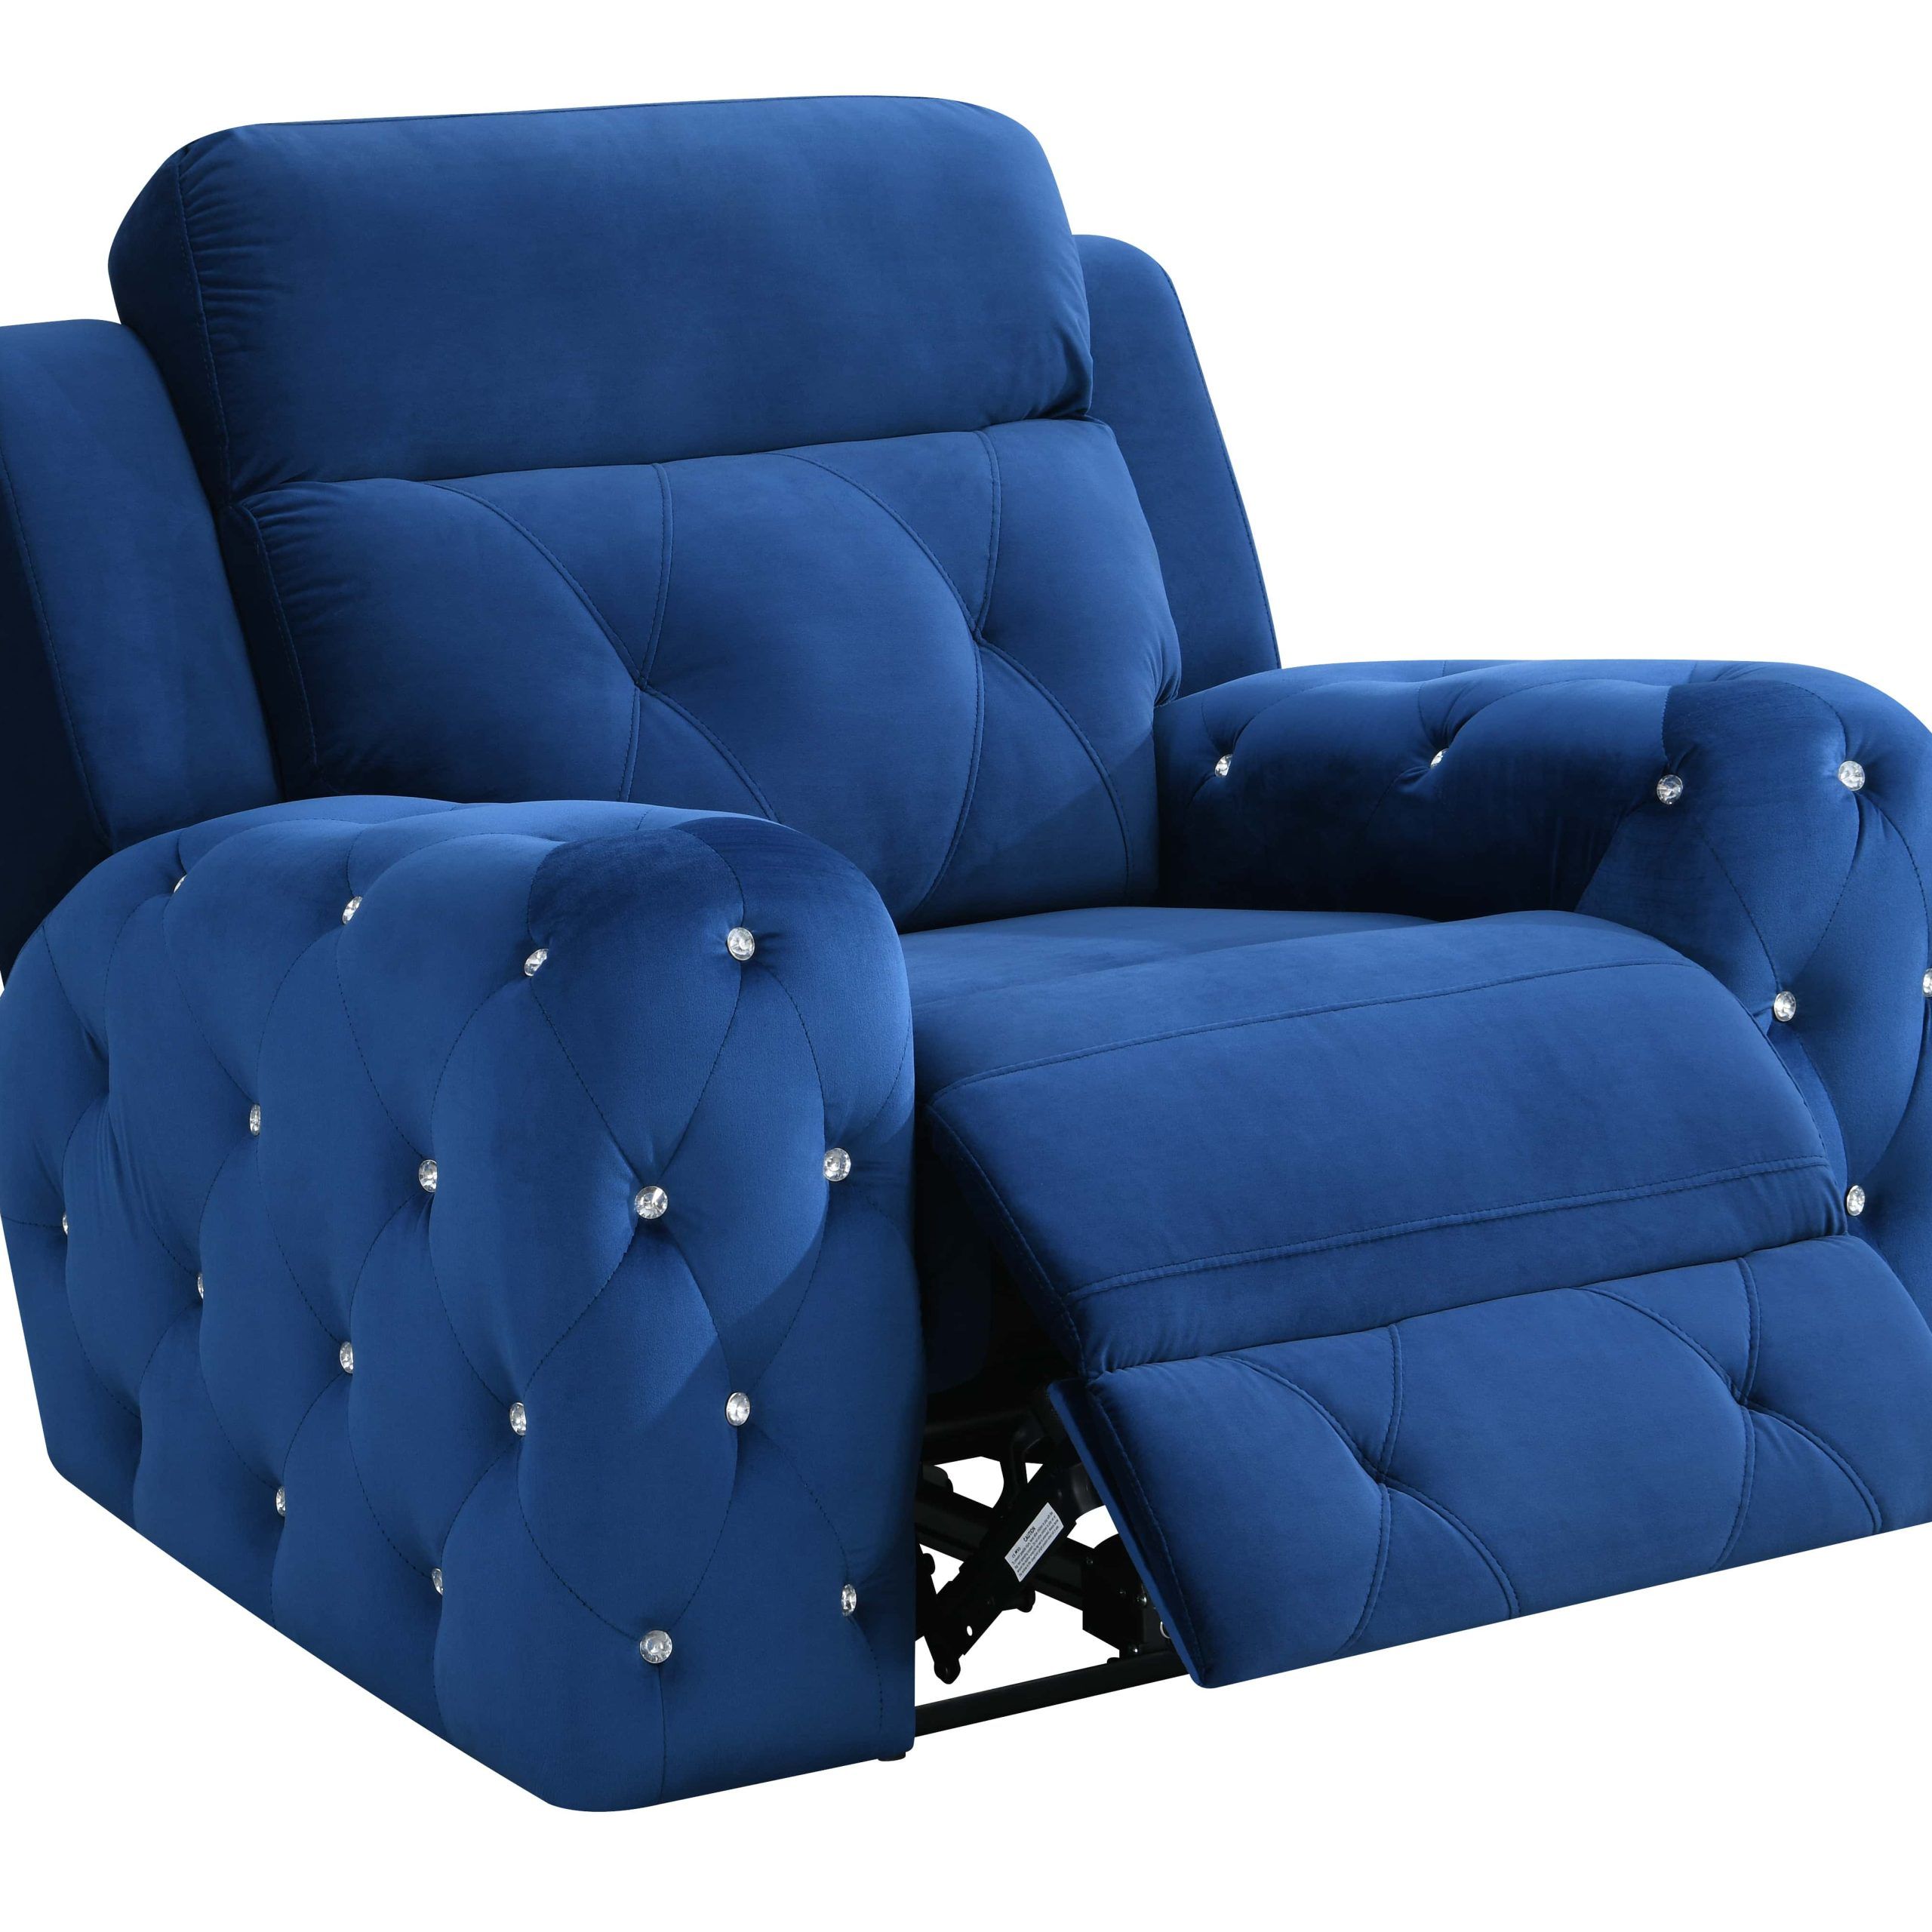 U8311 Blue Velvet Power Recliner Chairglobal Furniture With Regard To Modern Velvet Upholstered Recliner Chairs (View 16 of 20)